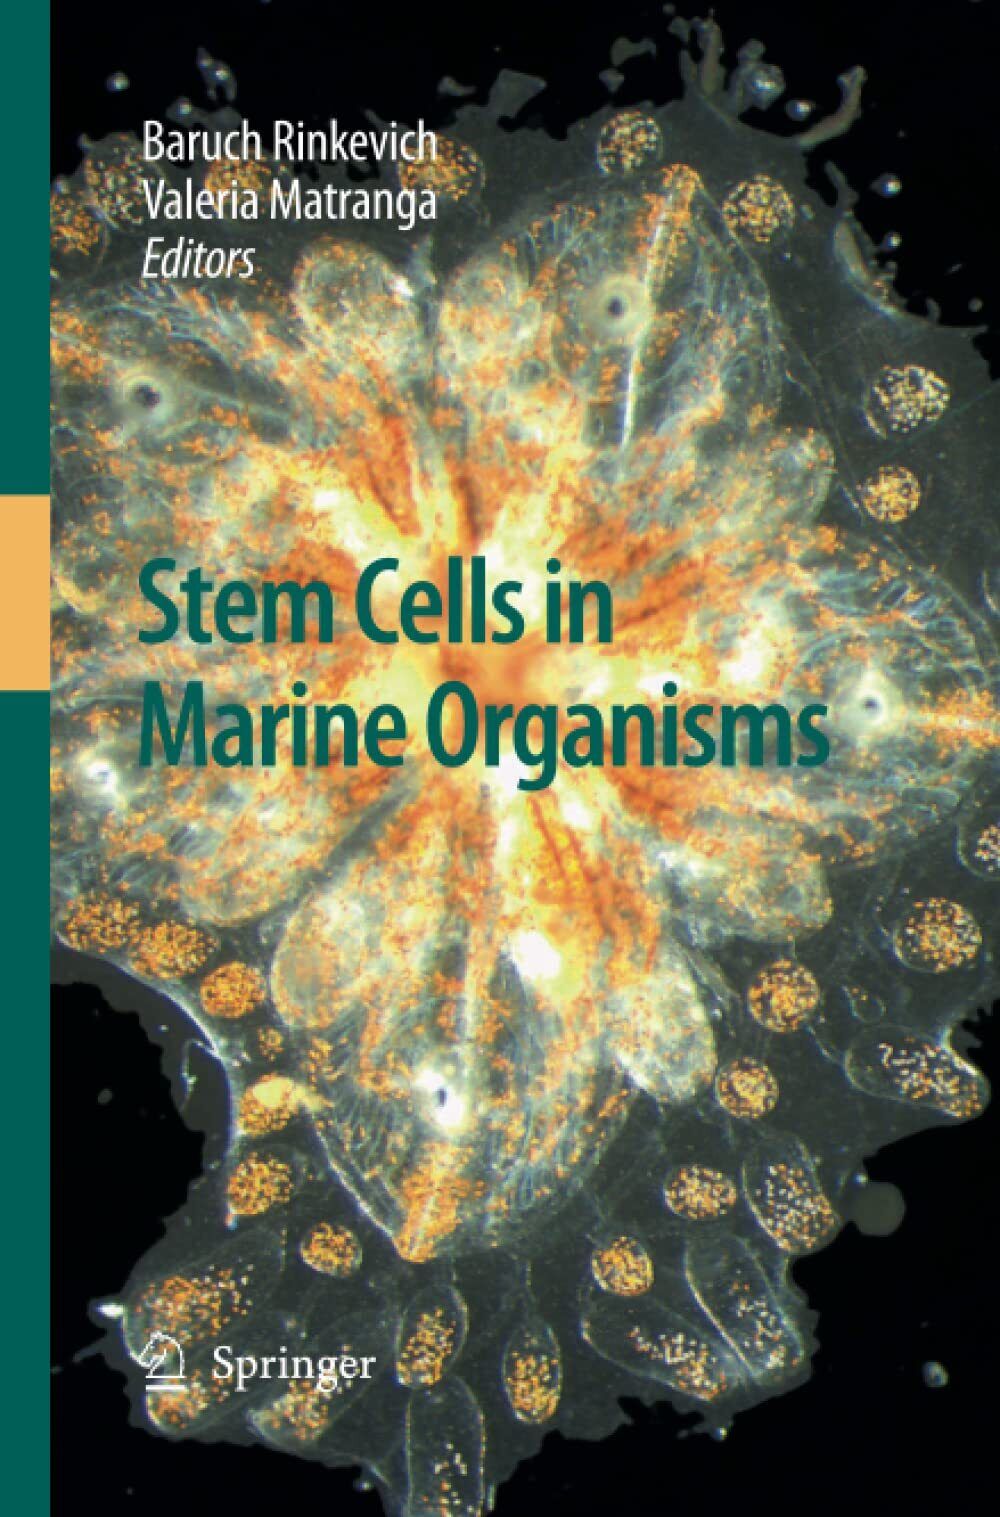 Stem Cells in Marine Organisms - Baruch Rinkevich - Springer, 2014